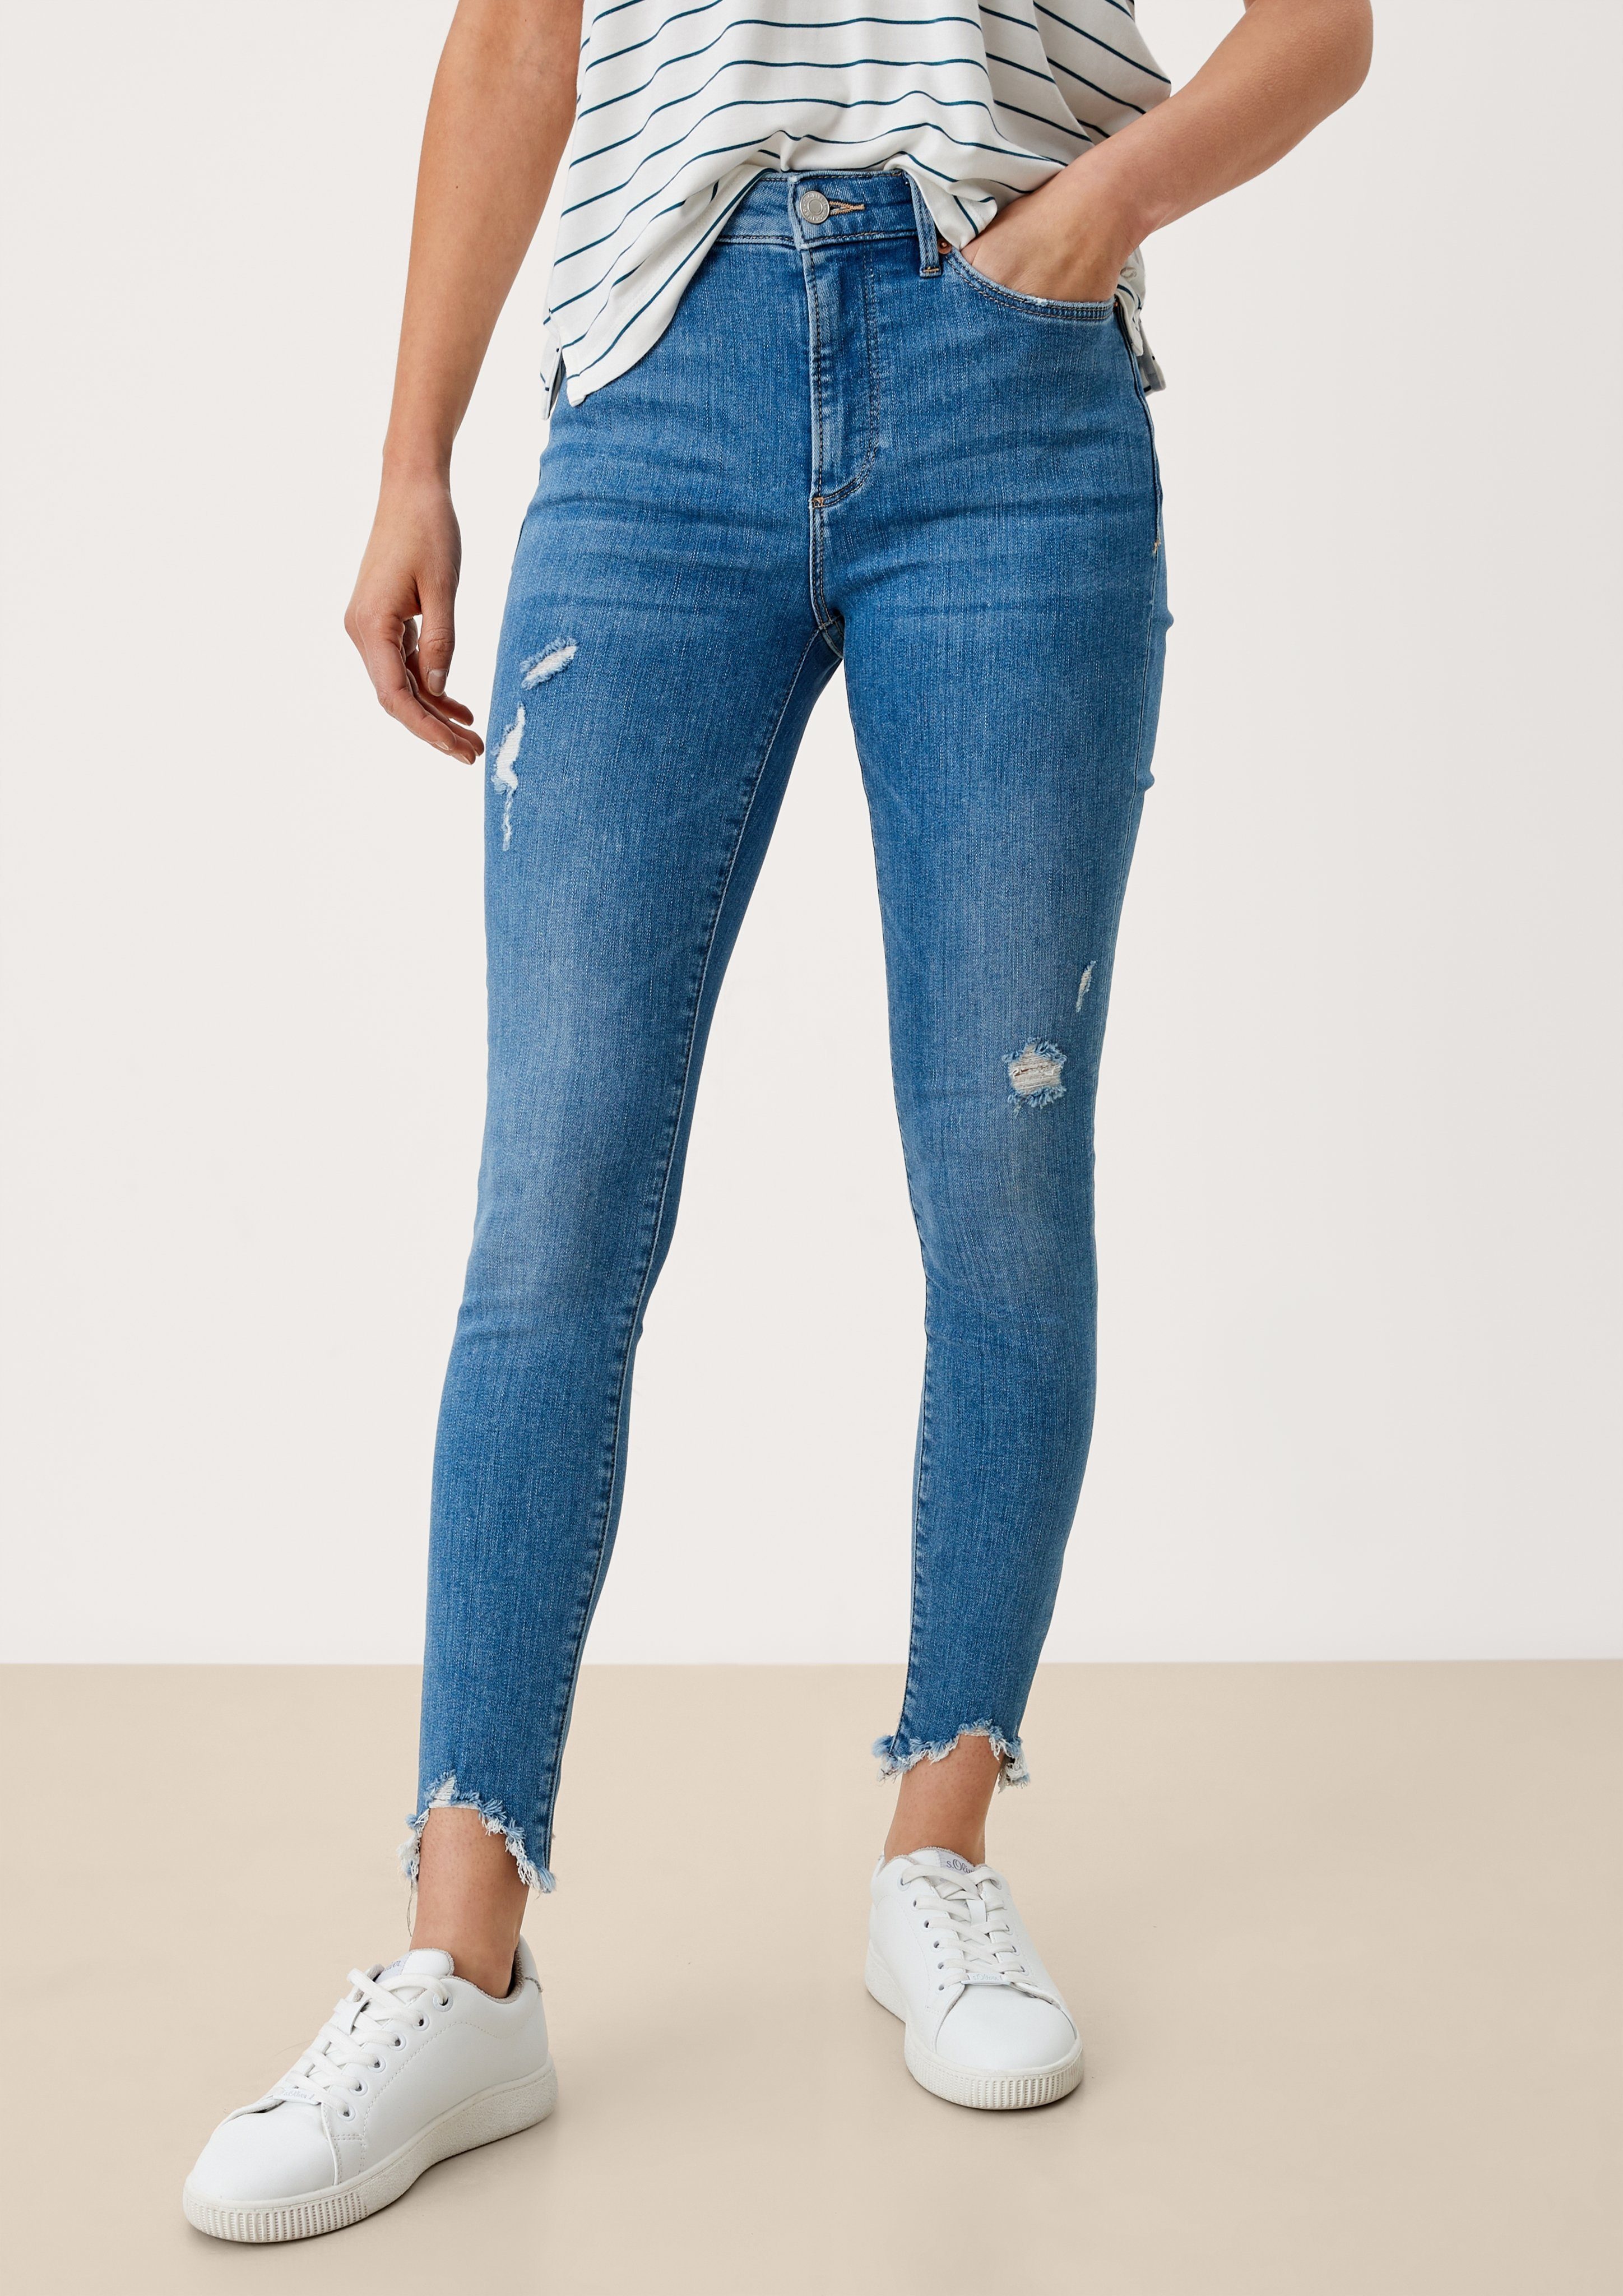 s.Oliver 7/8-Jeans »Skinny: Ankle-Jeans mit Destroyes« Waschung, Destroyes,  Leder-Patch online kaufen | OTTO